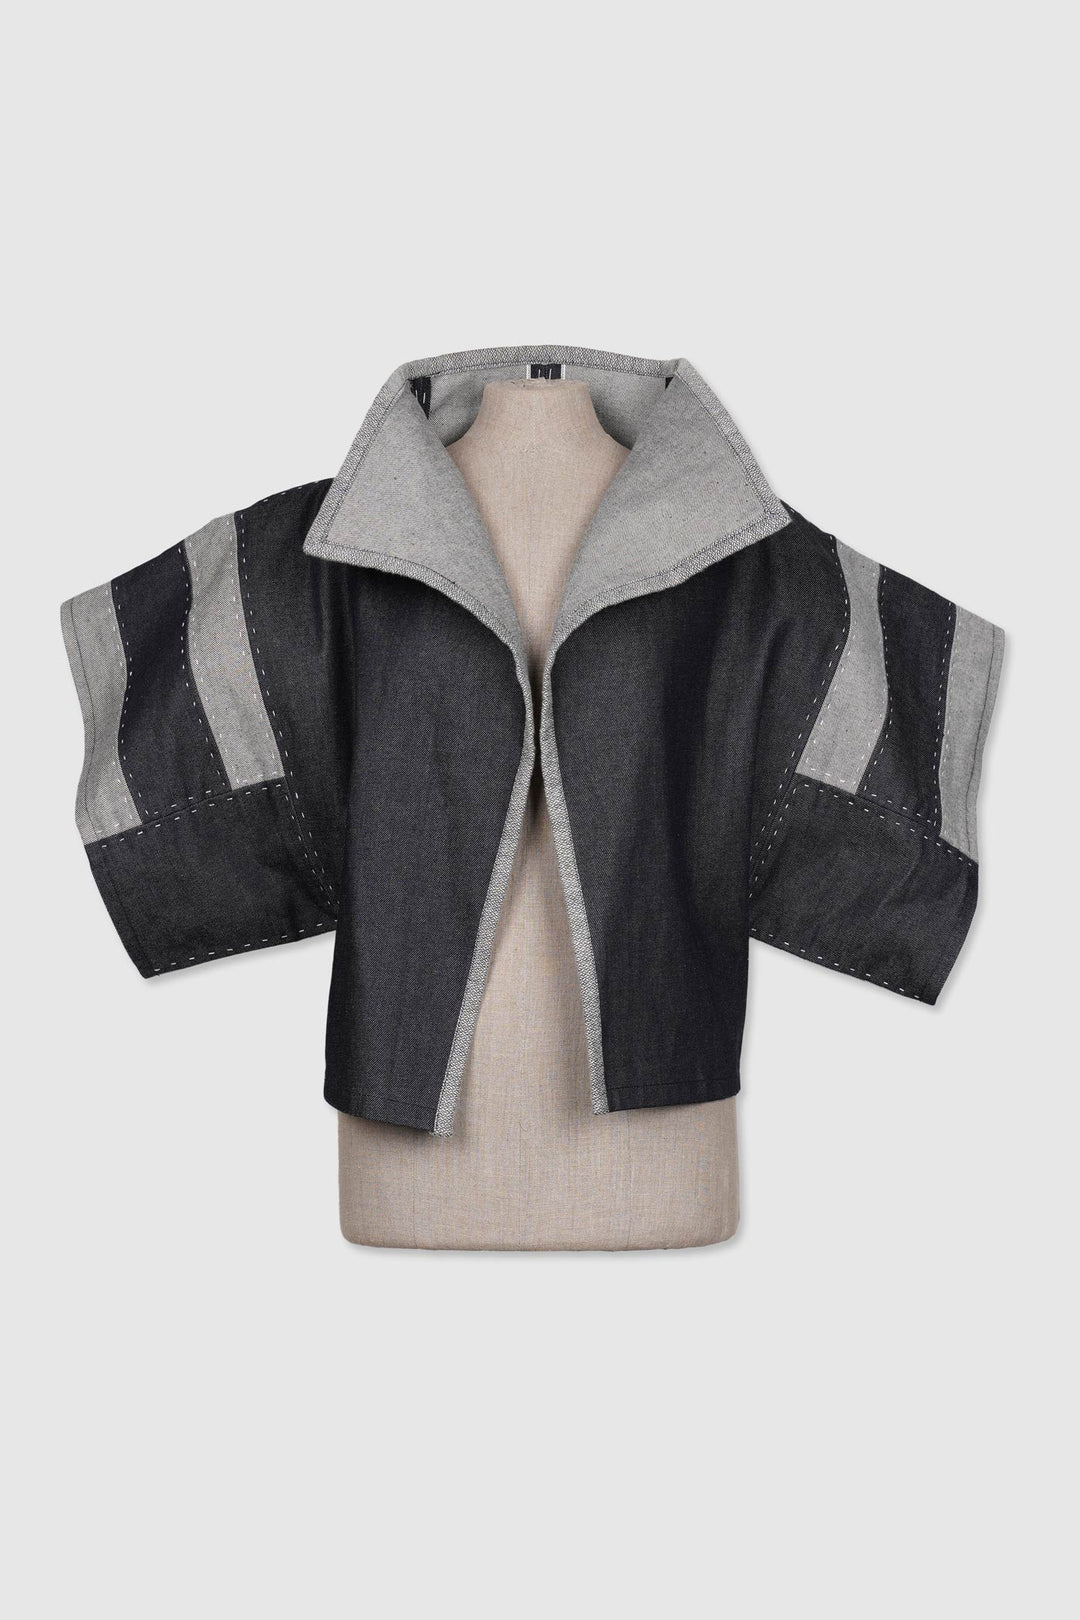 Japanese Contemporary Reversible Patchwork Japanese Denim Jacket